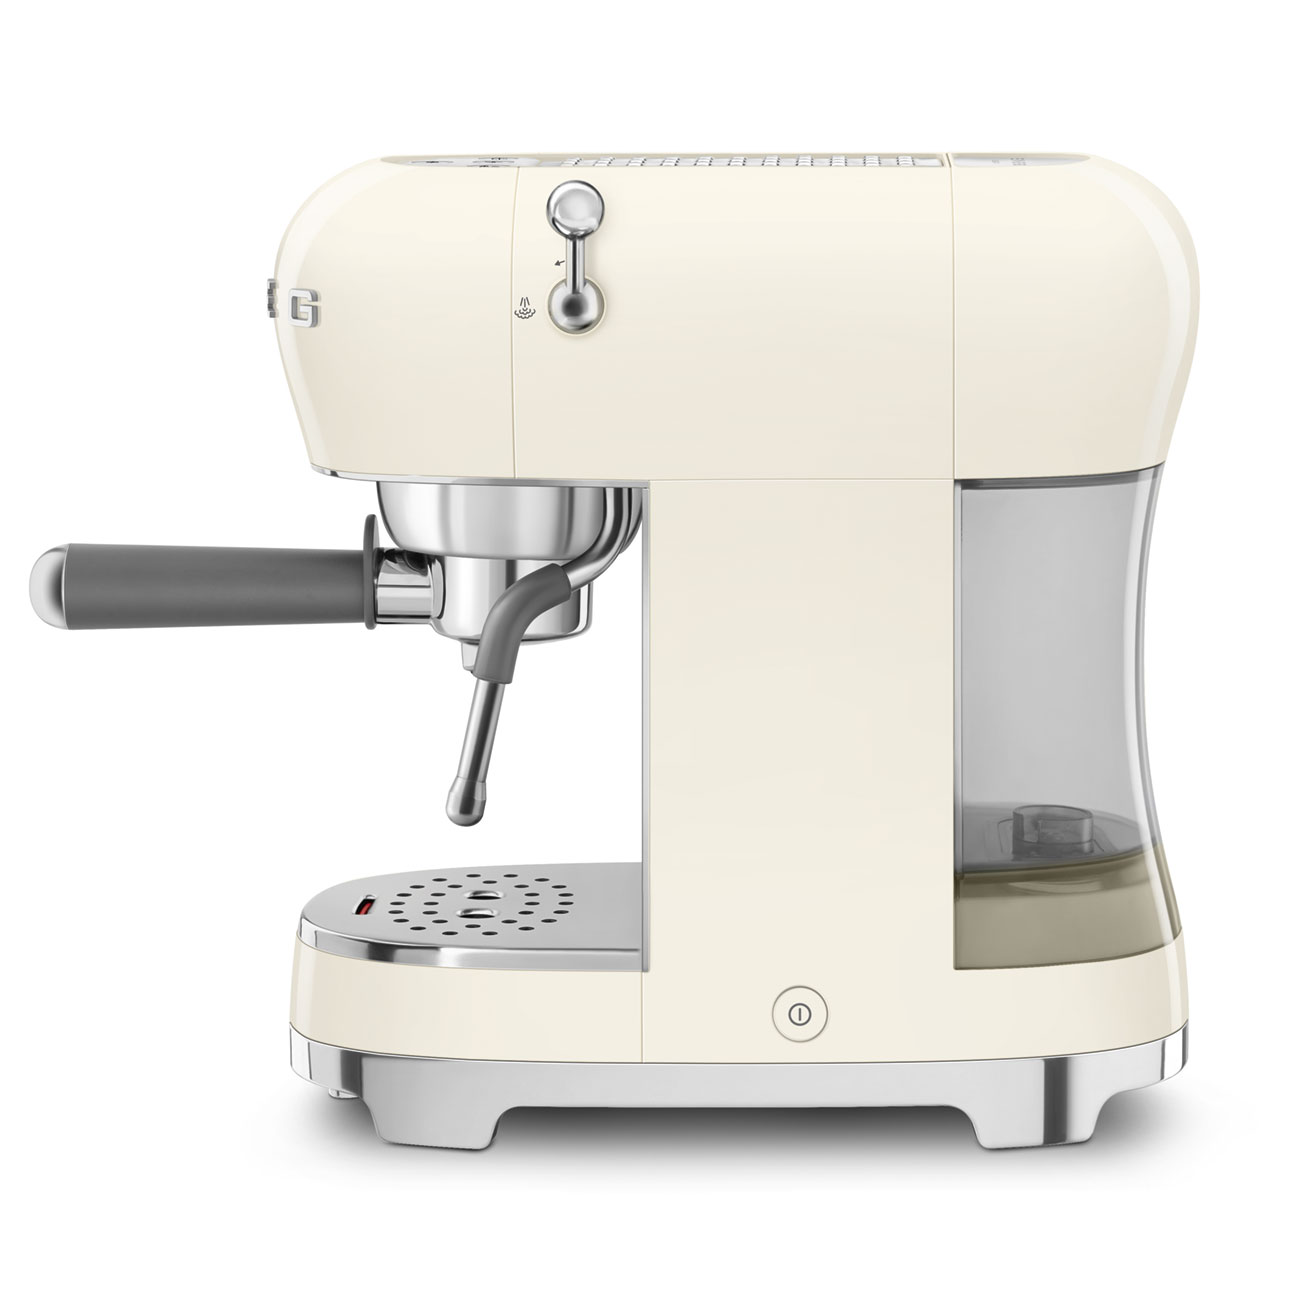 Smeg Cream Espresso Manual Coffee Machine with Steam Wand_2